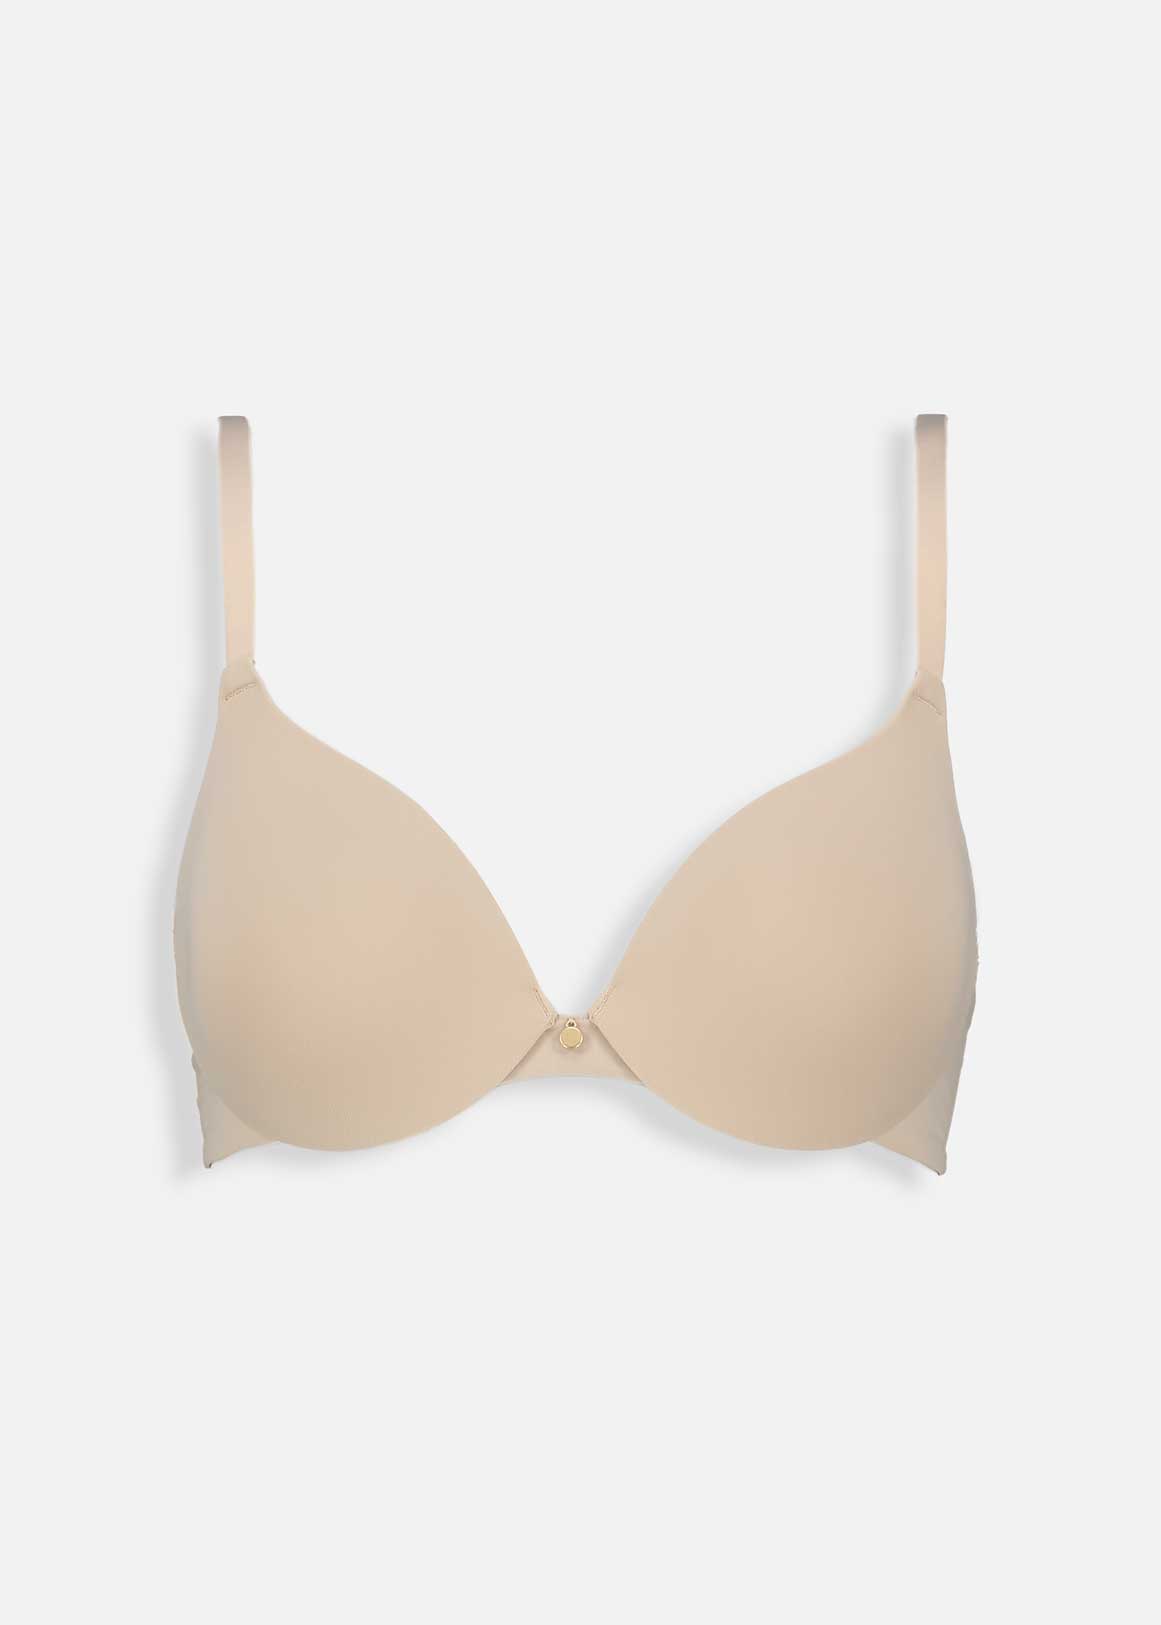 Wholesale white net bra For Supportive Underwear 